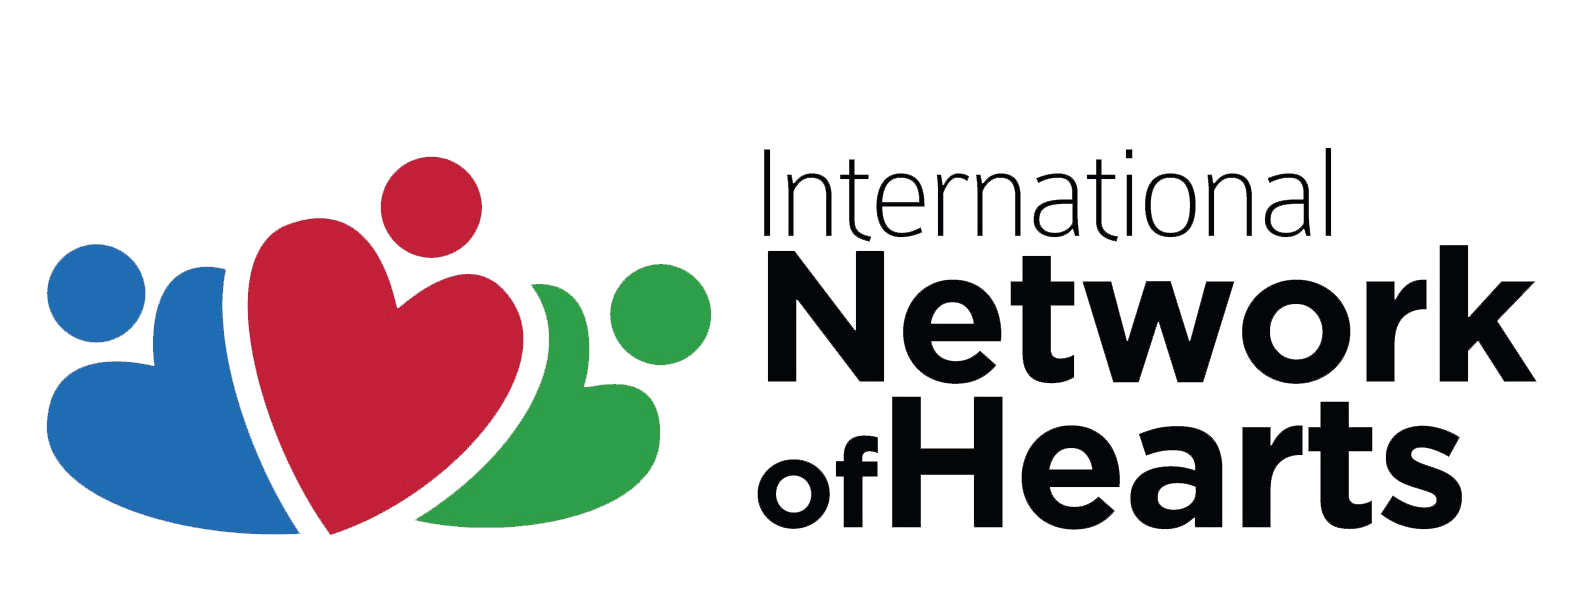 International Network of Hearts